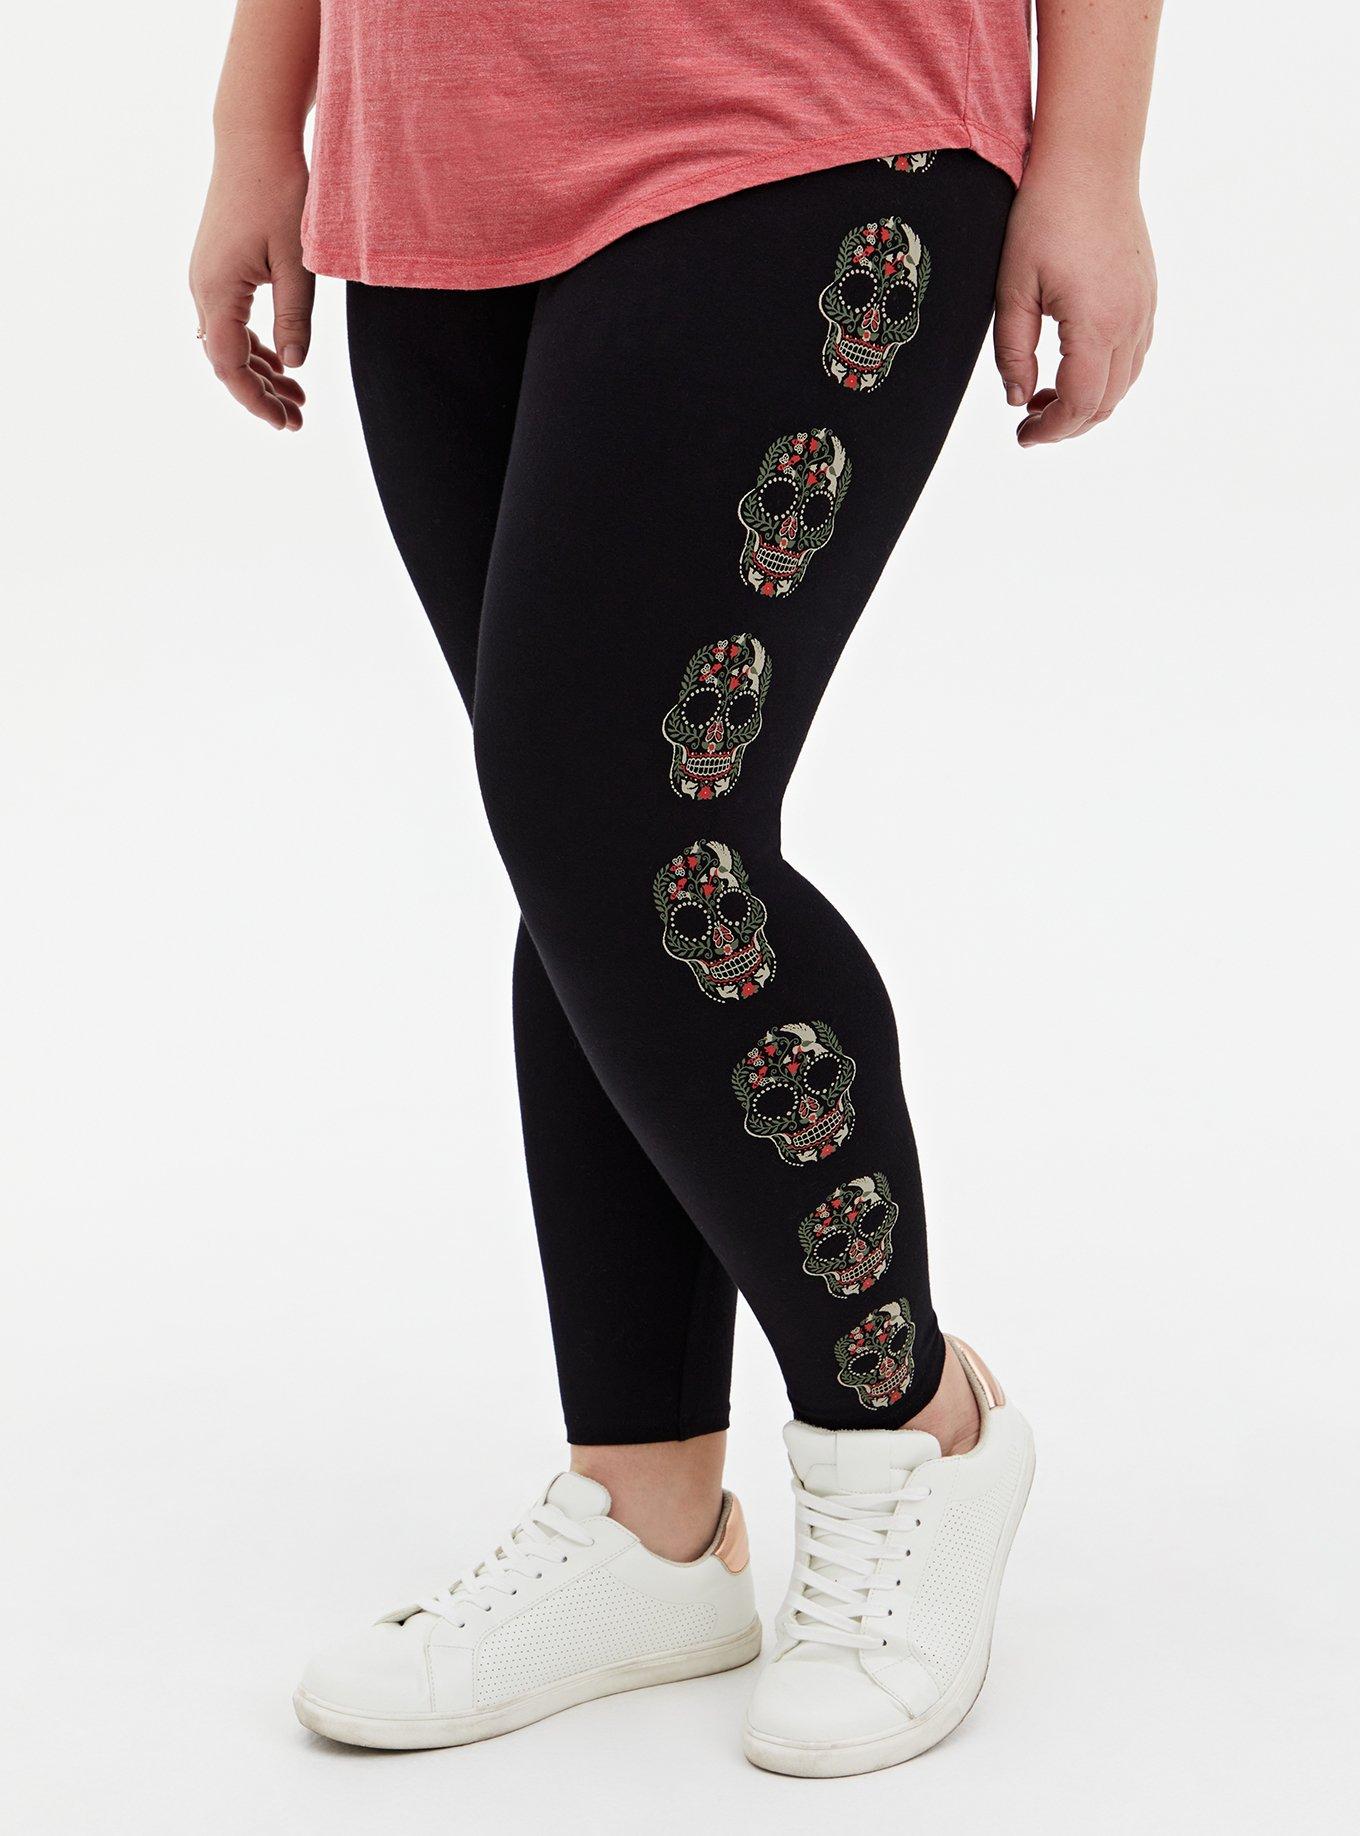 Womens Leggings Plus Size Graphic Print Pants Camo Skull Floral